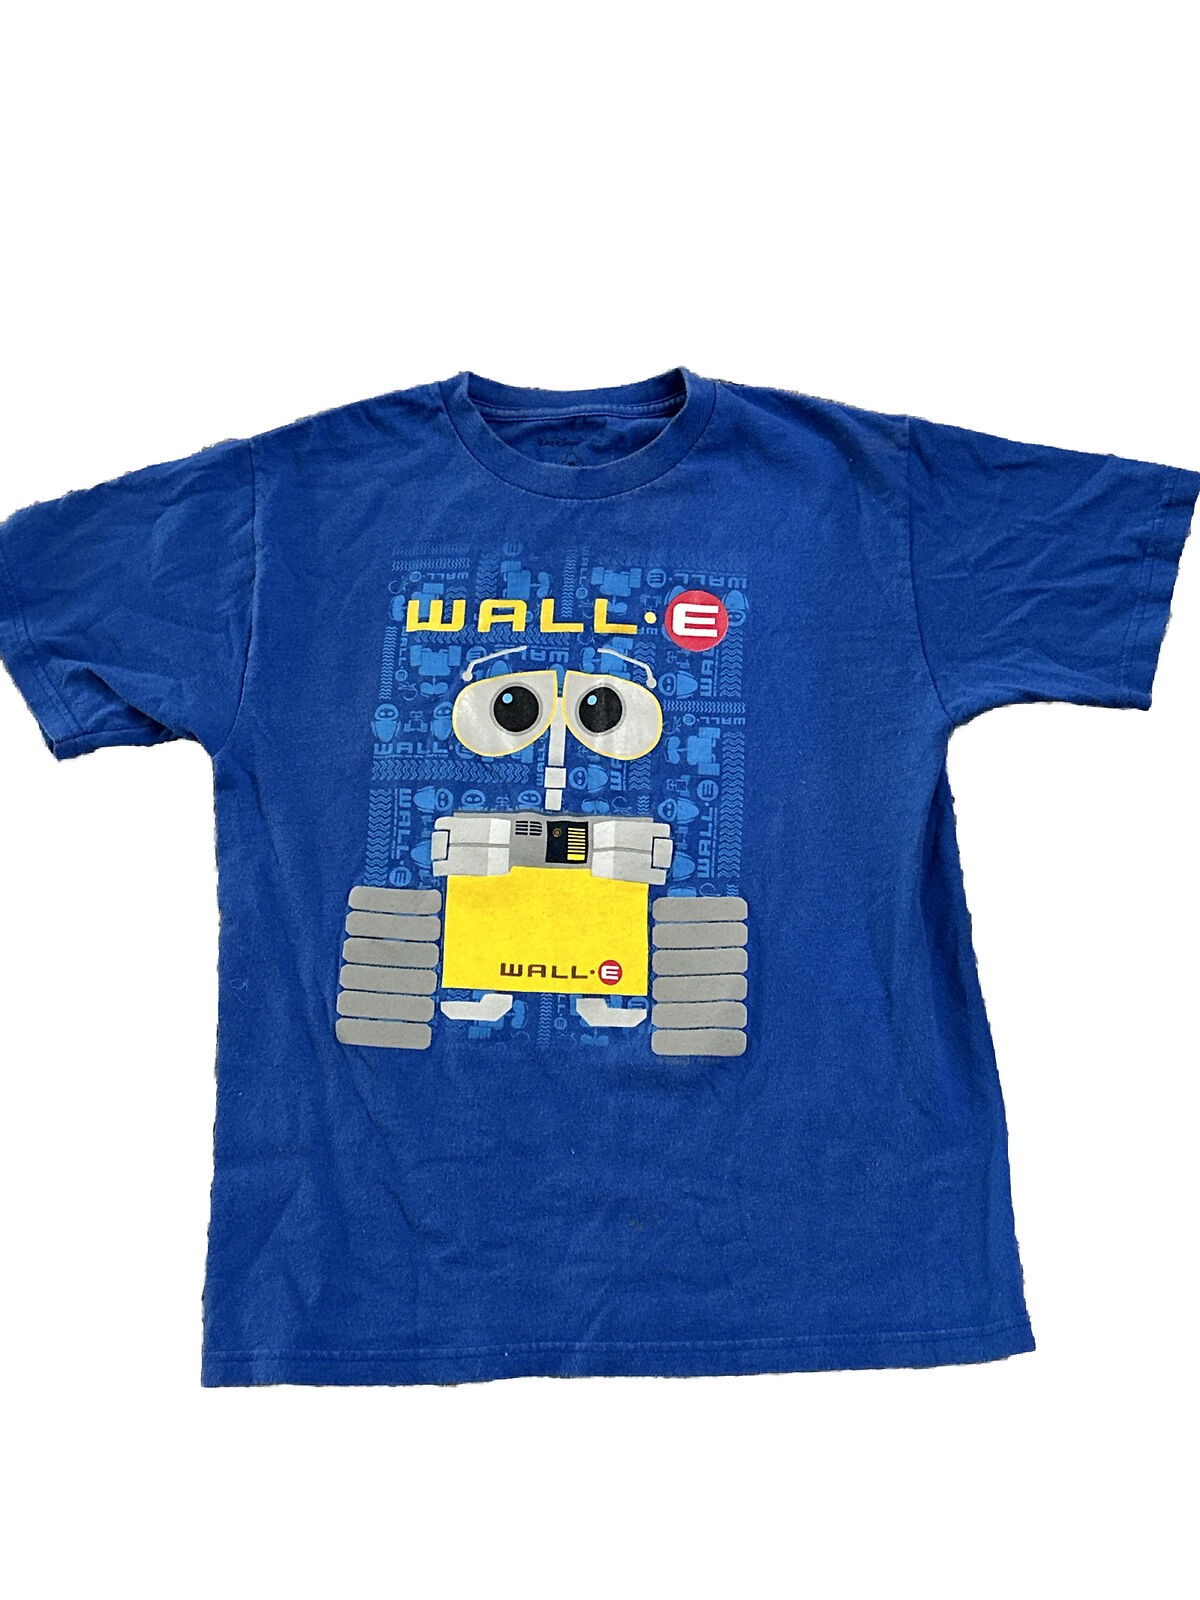 disney pixar wall-E  Vintage T-Shirt Childs Medium